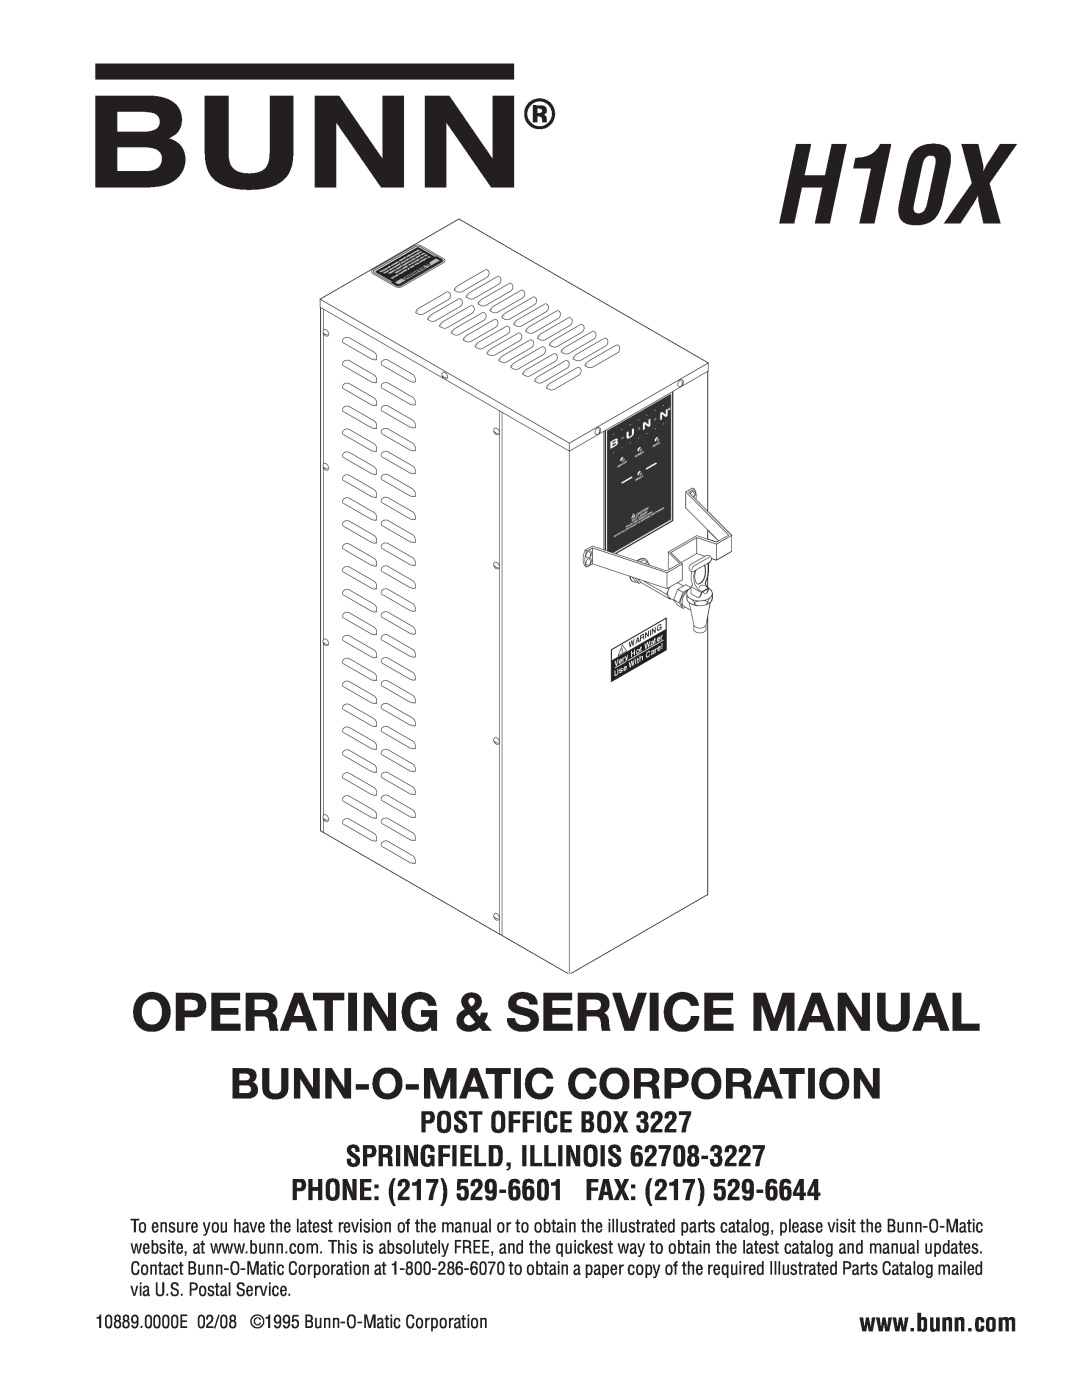 Bunn service manual BUNN H10X, Bunn-O-Maticcorporation, Post Office Box Springfield, Illinois, PHONE 217 529-6601FAX 